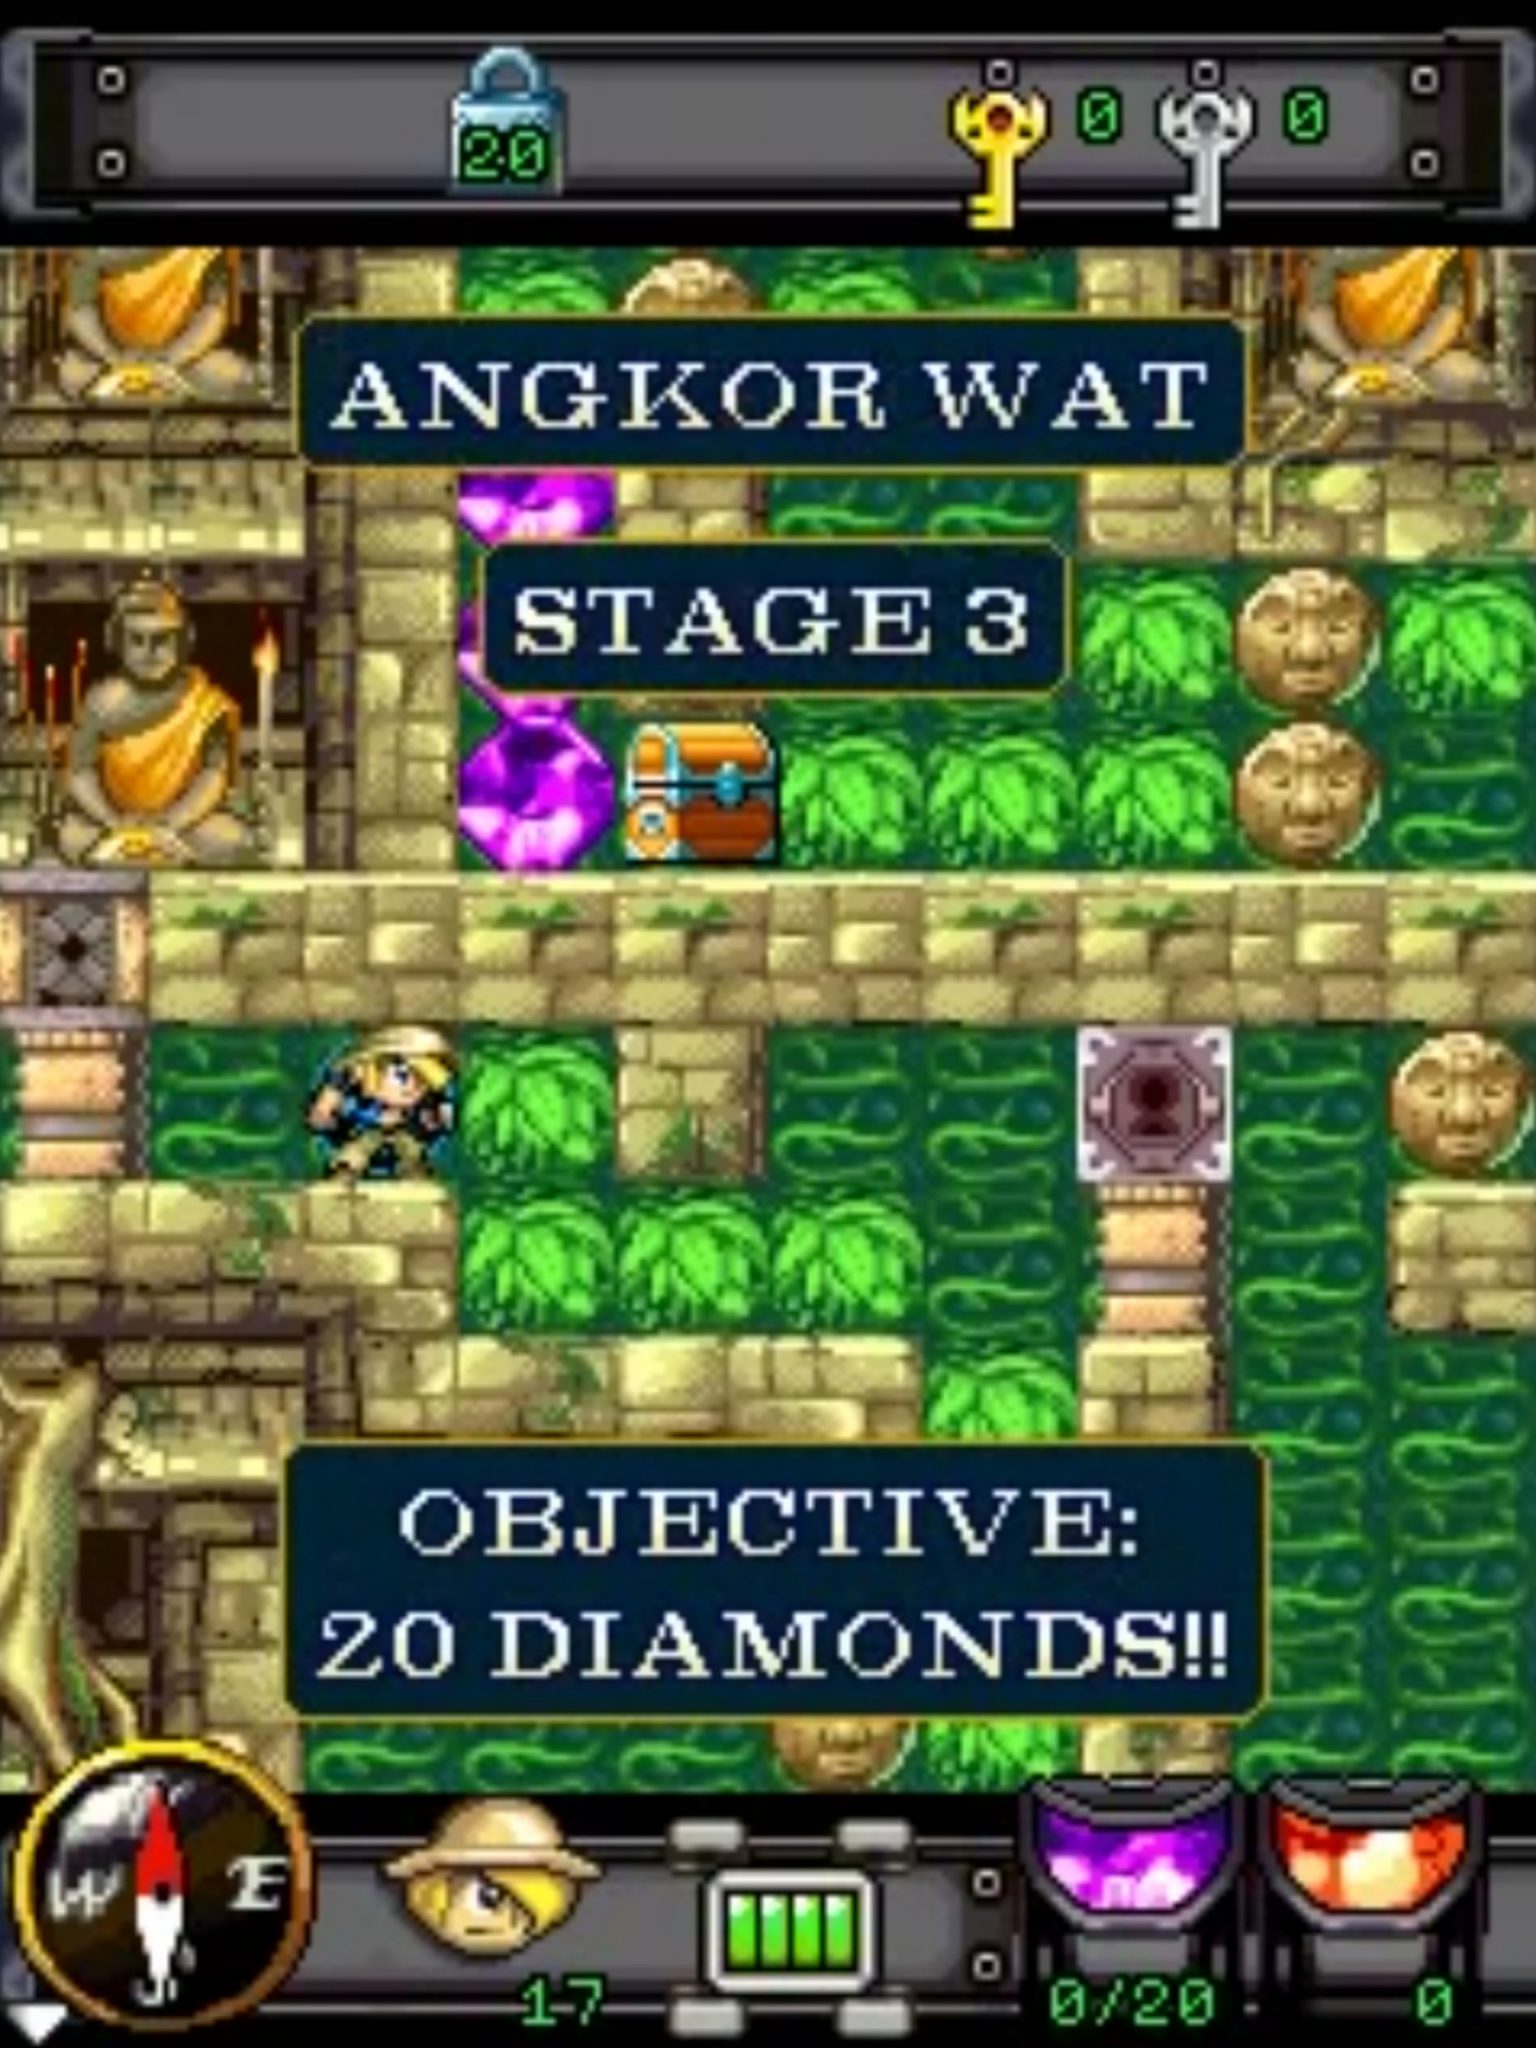 diamond rush nokia x2 game download